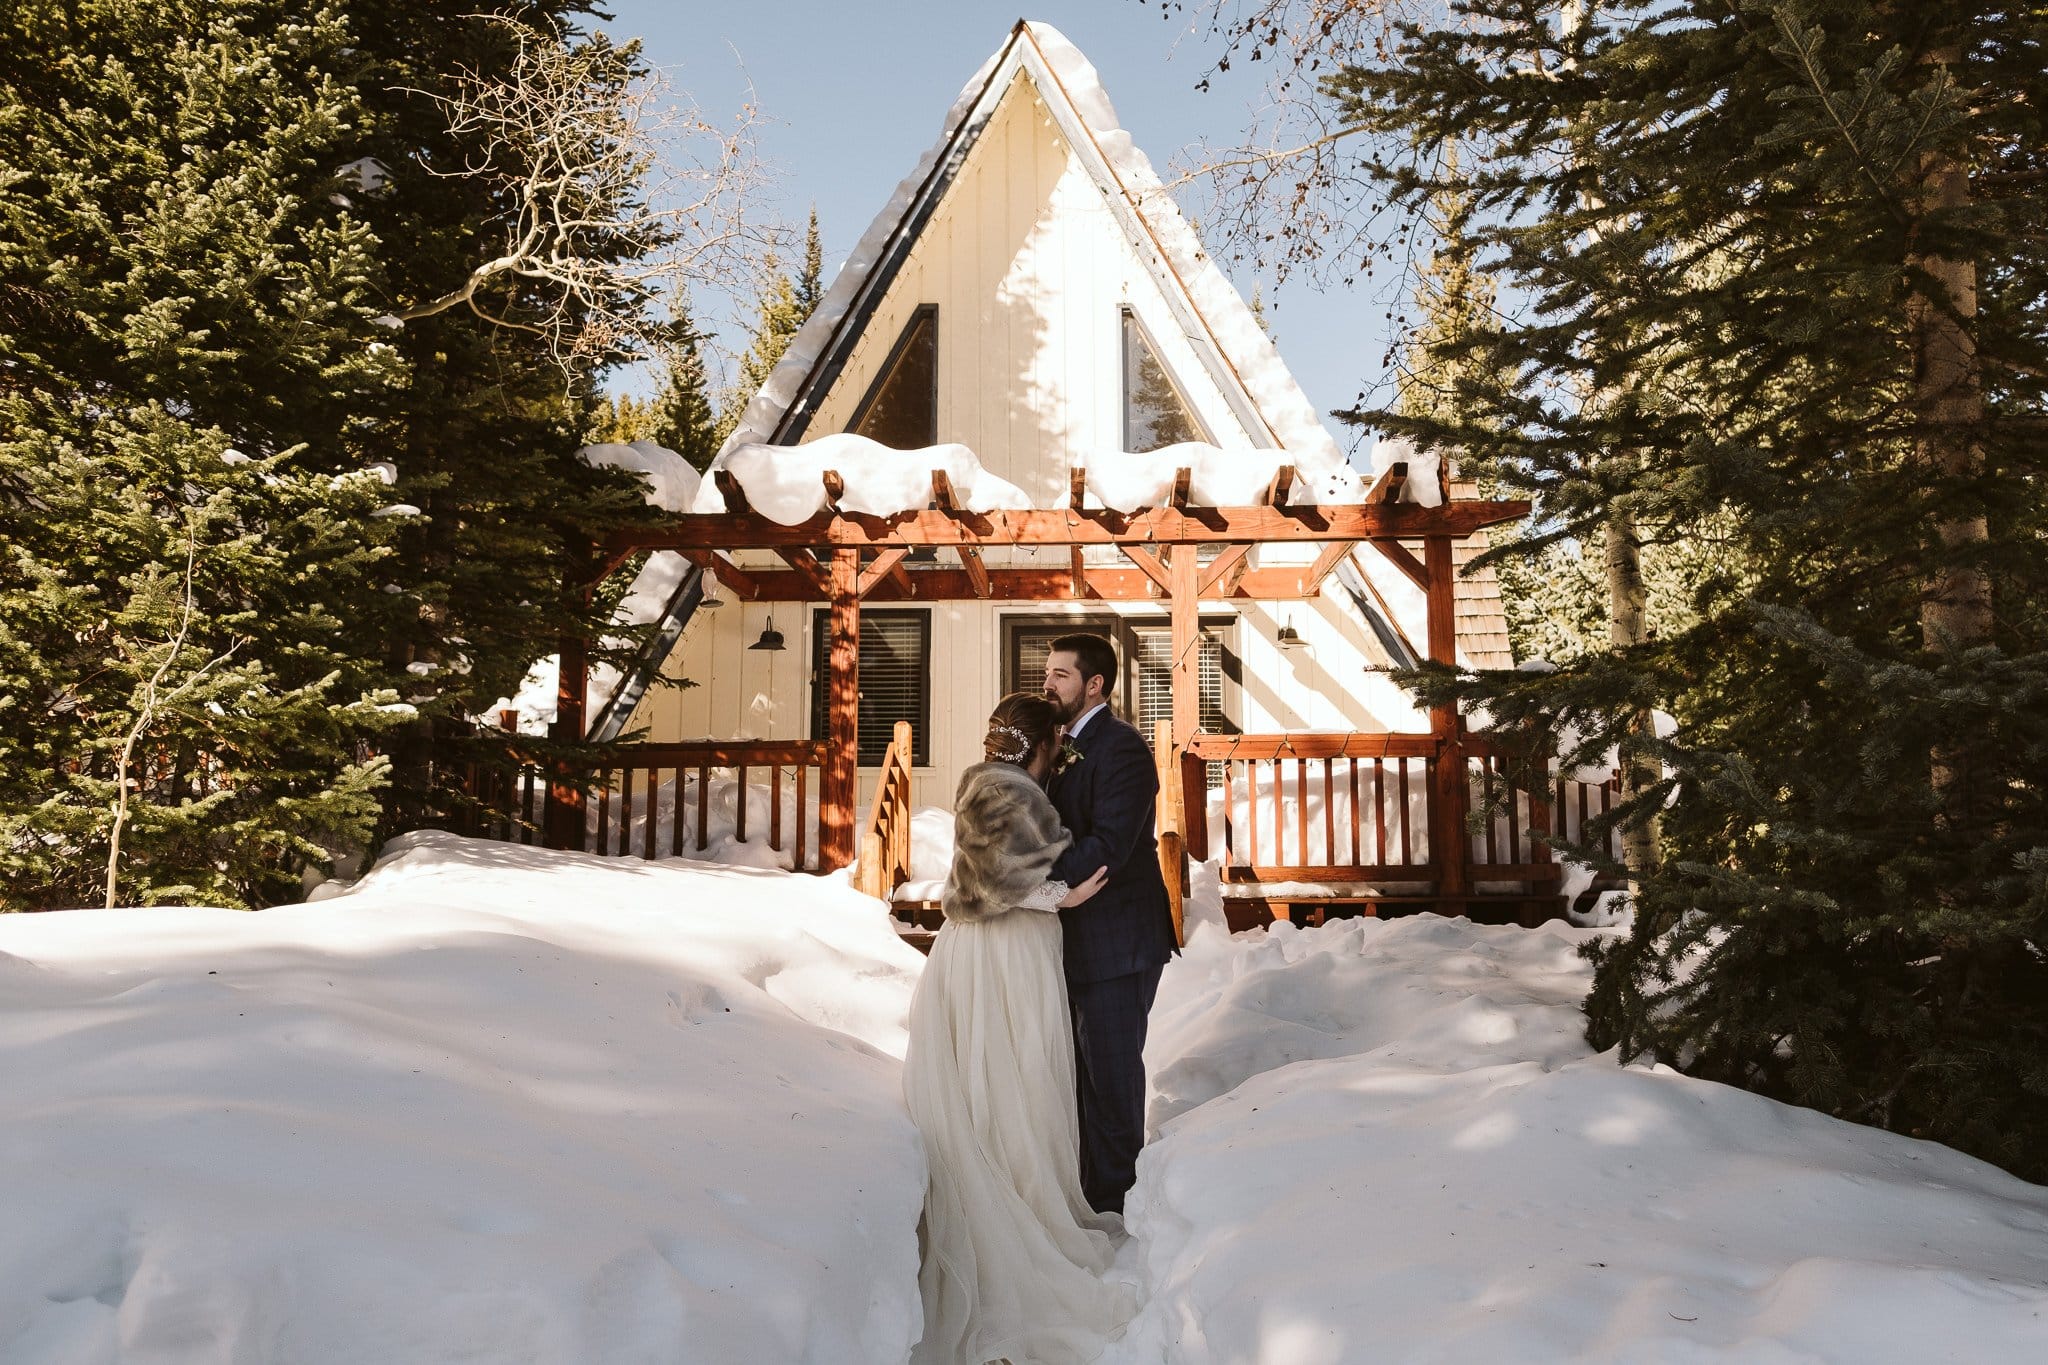 A-frame cabin winter elopement in Breckenridge, Colorado.